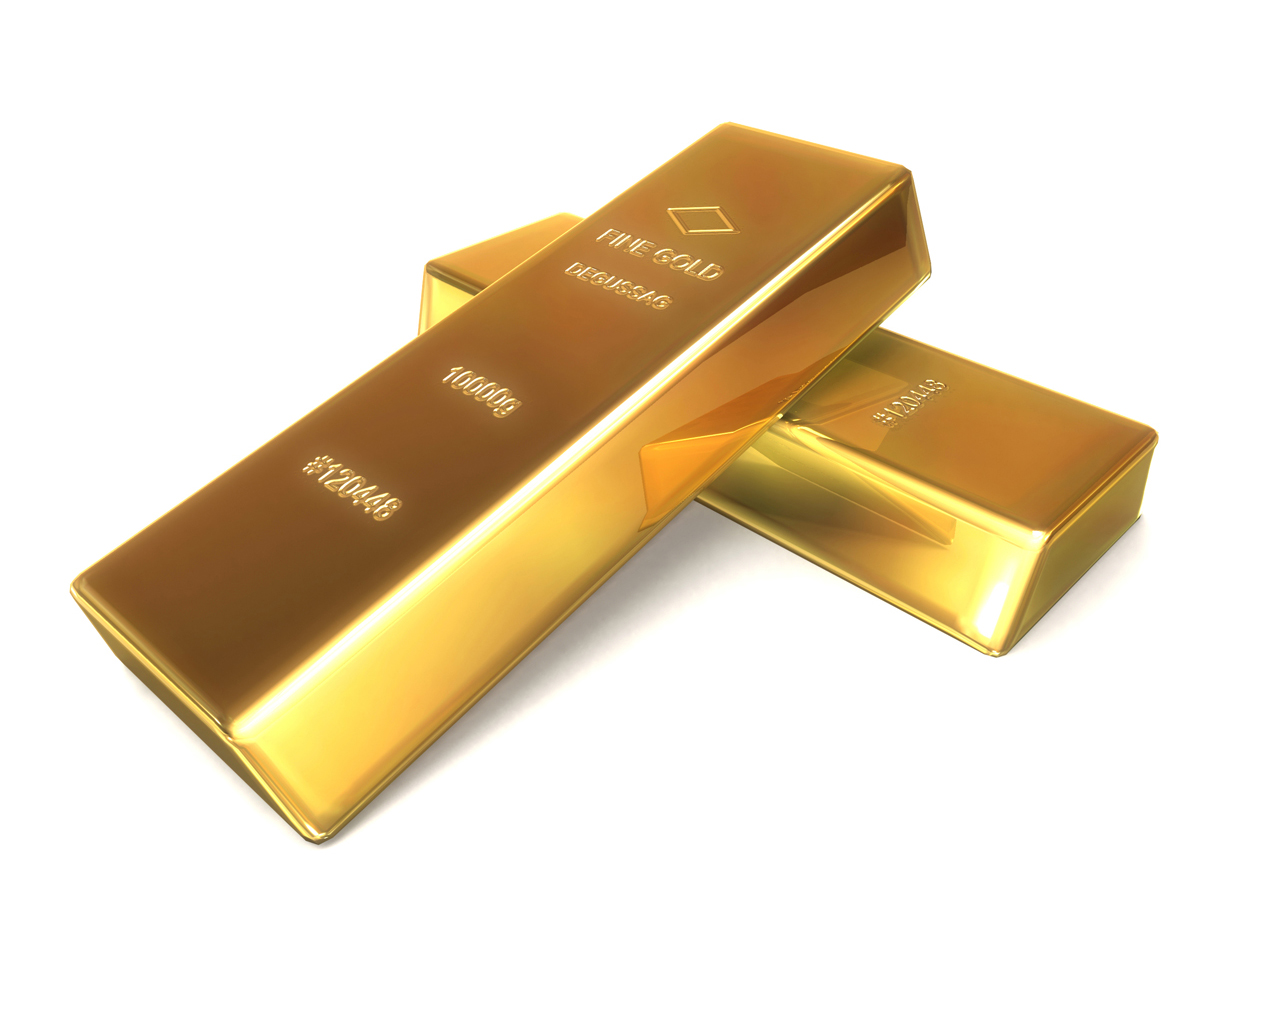 Two Gold Bars - Gold Bar Color Code - HD Wallpaper 